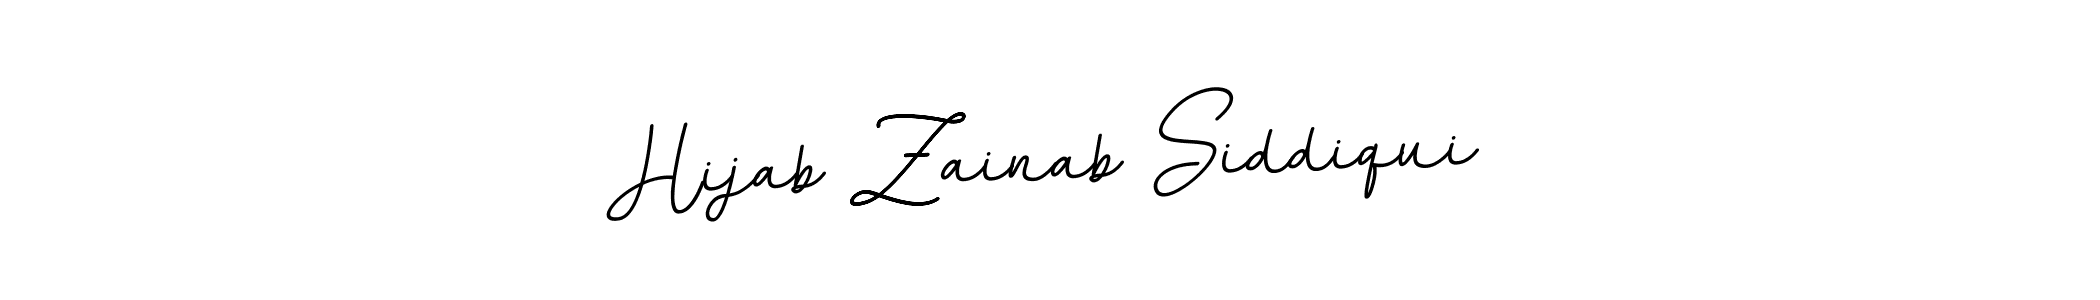 Hijab Zainab Siddiqui stylish signature style. Best Handwritten Sign (BallpointsItalic-DORy9) for my name. Handwritten Signature Collection Ideas for my name Hijab Zainab Siddiqui. Hijab Zainab Siddiqui signature style 11 images and pictures png